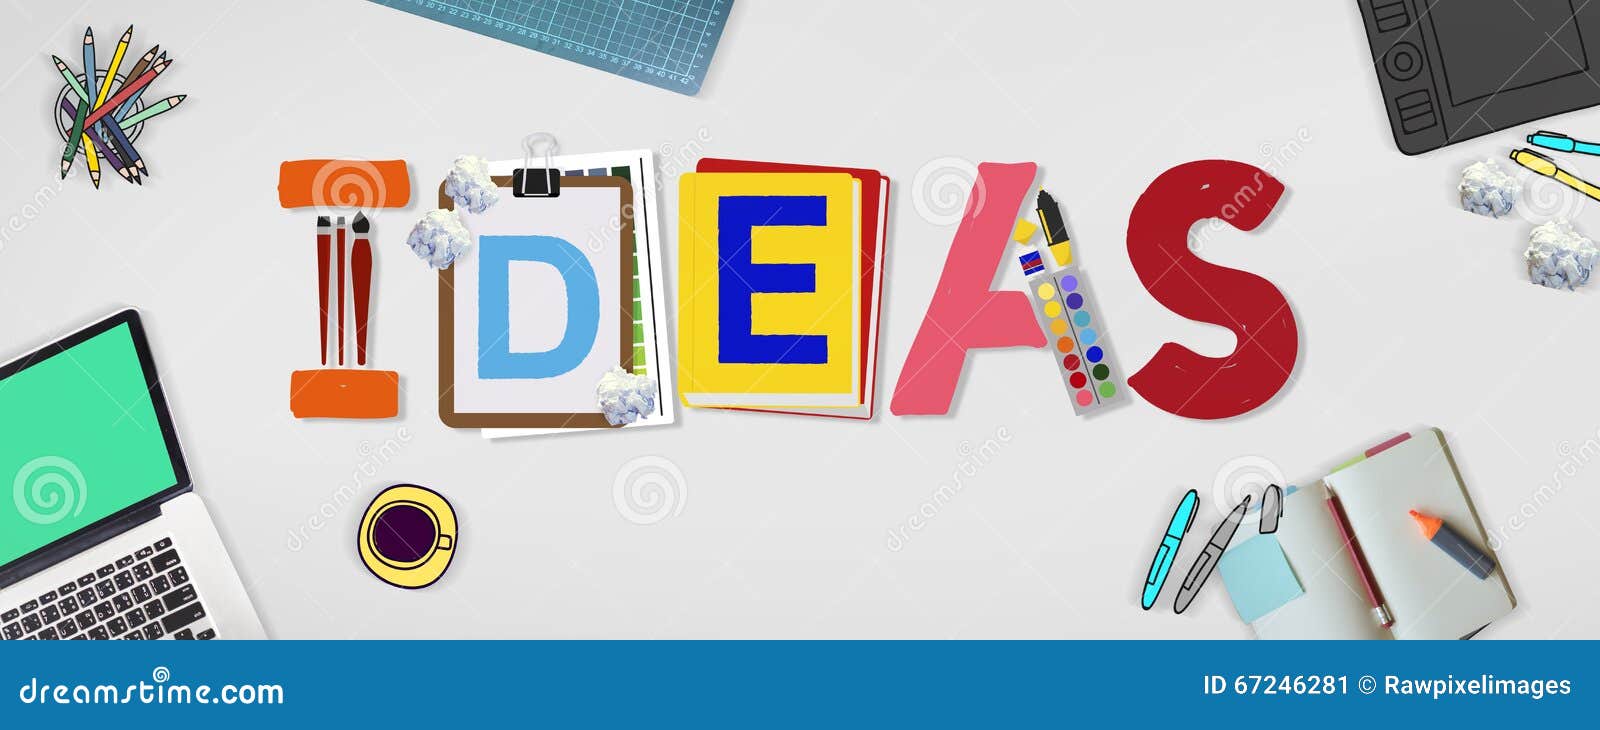 Ideas Creative Art Design Word Concept Stock Image Image